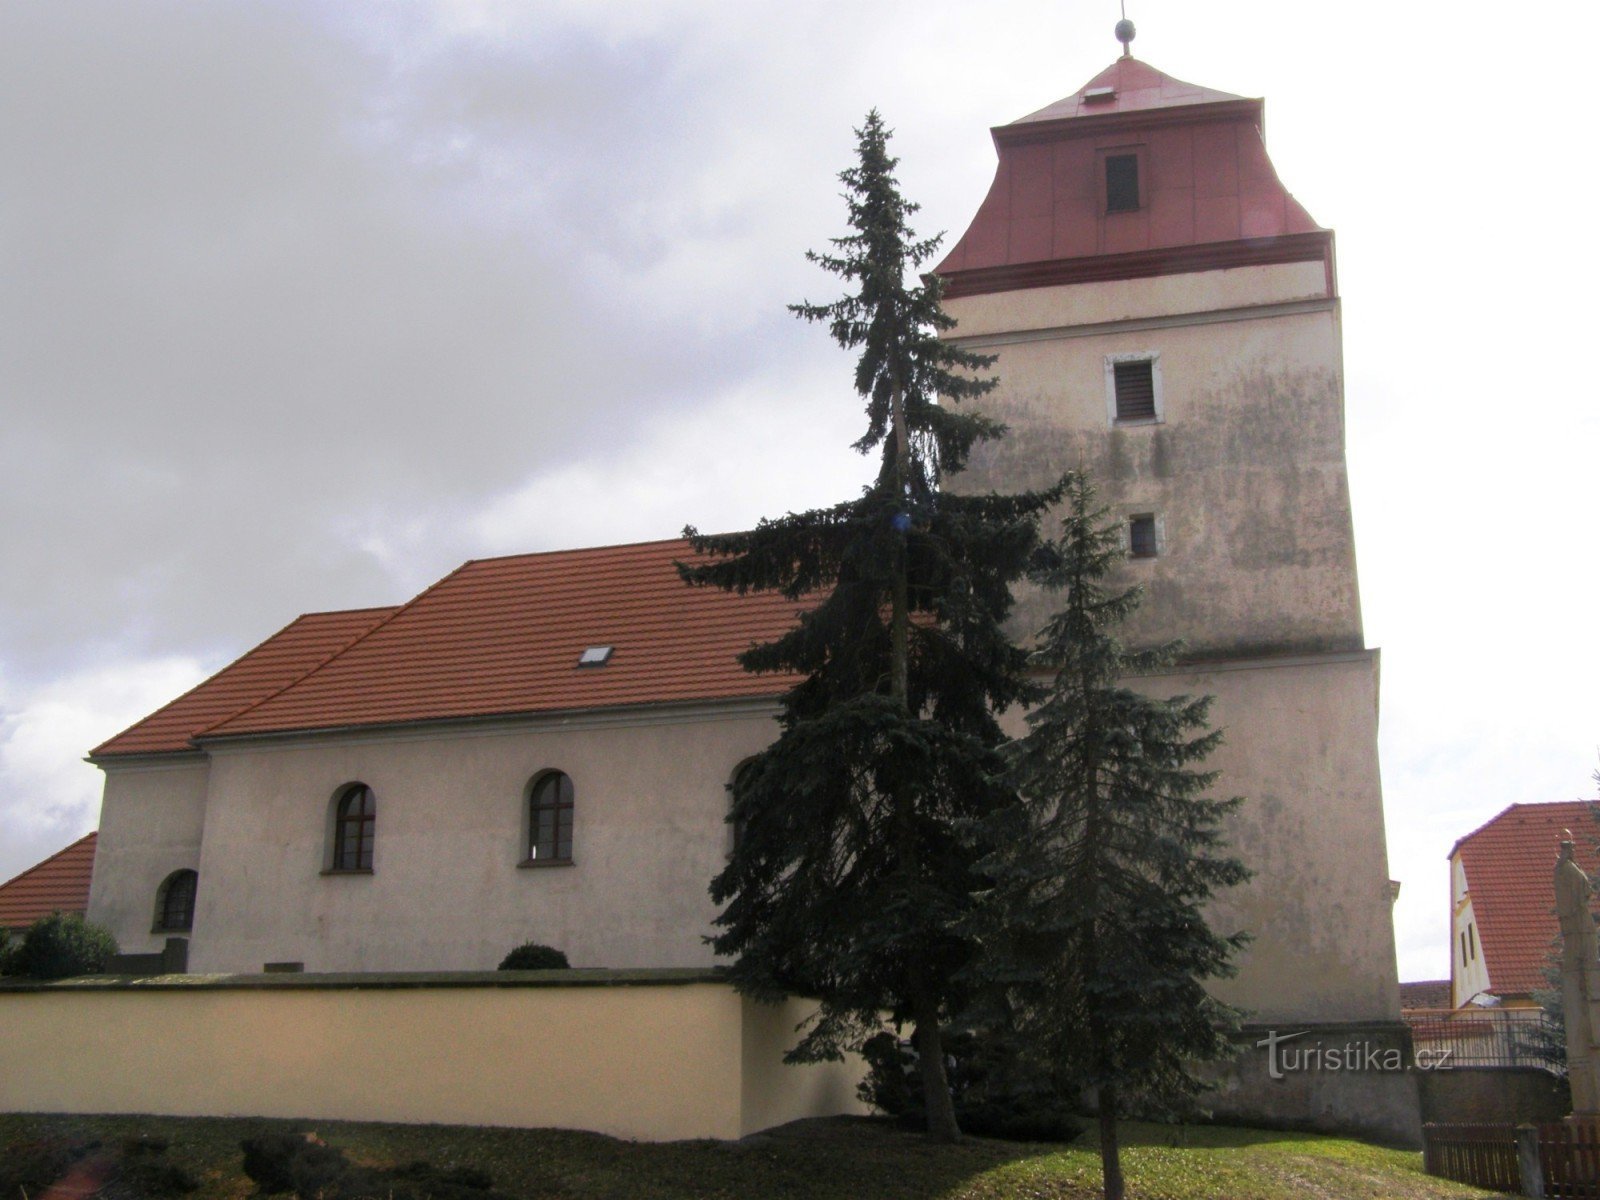 Libřice - crkva sv. Michaela